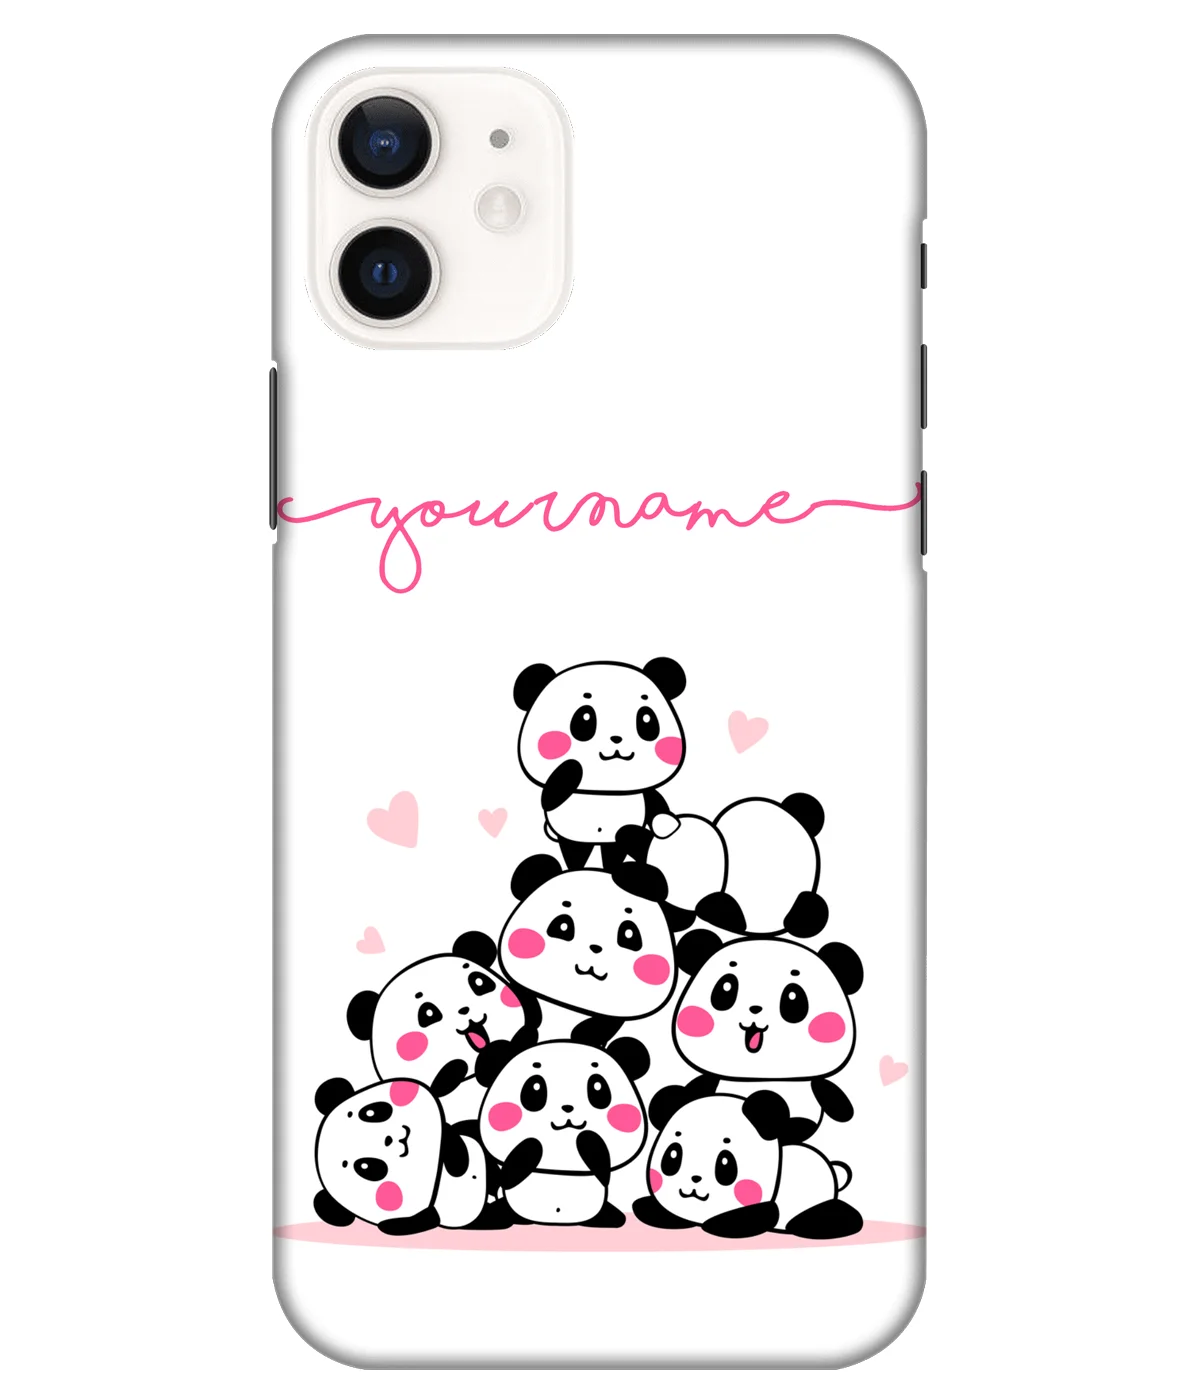 Cute Pandas Printed Name Case